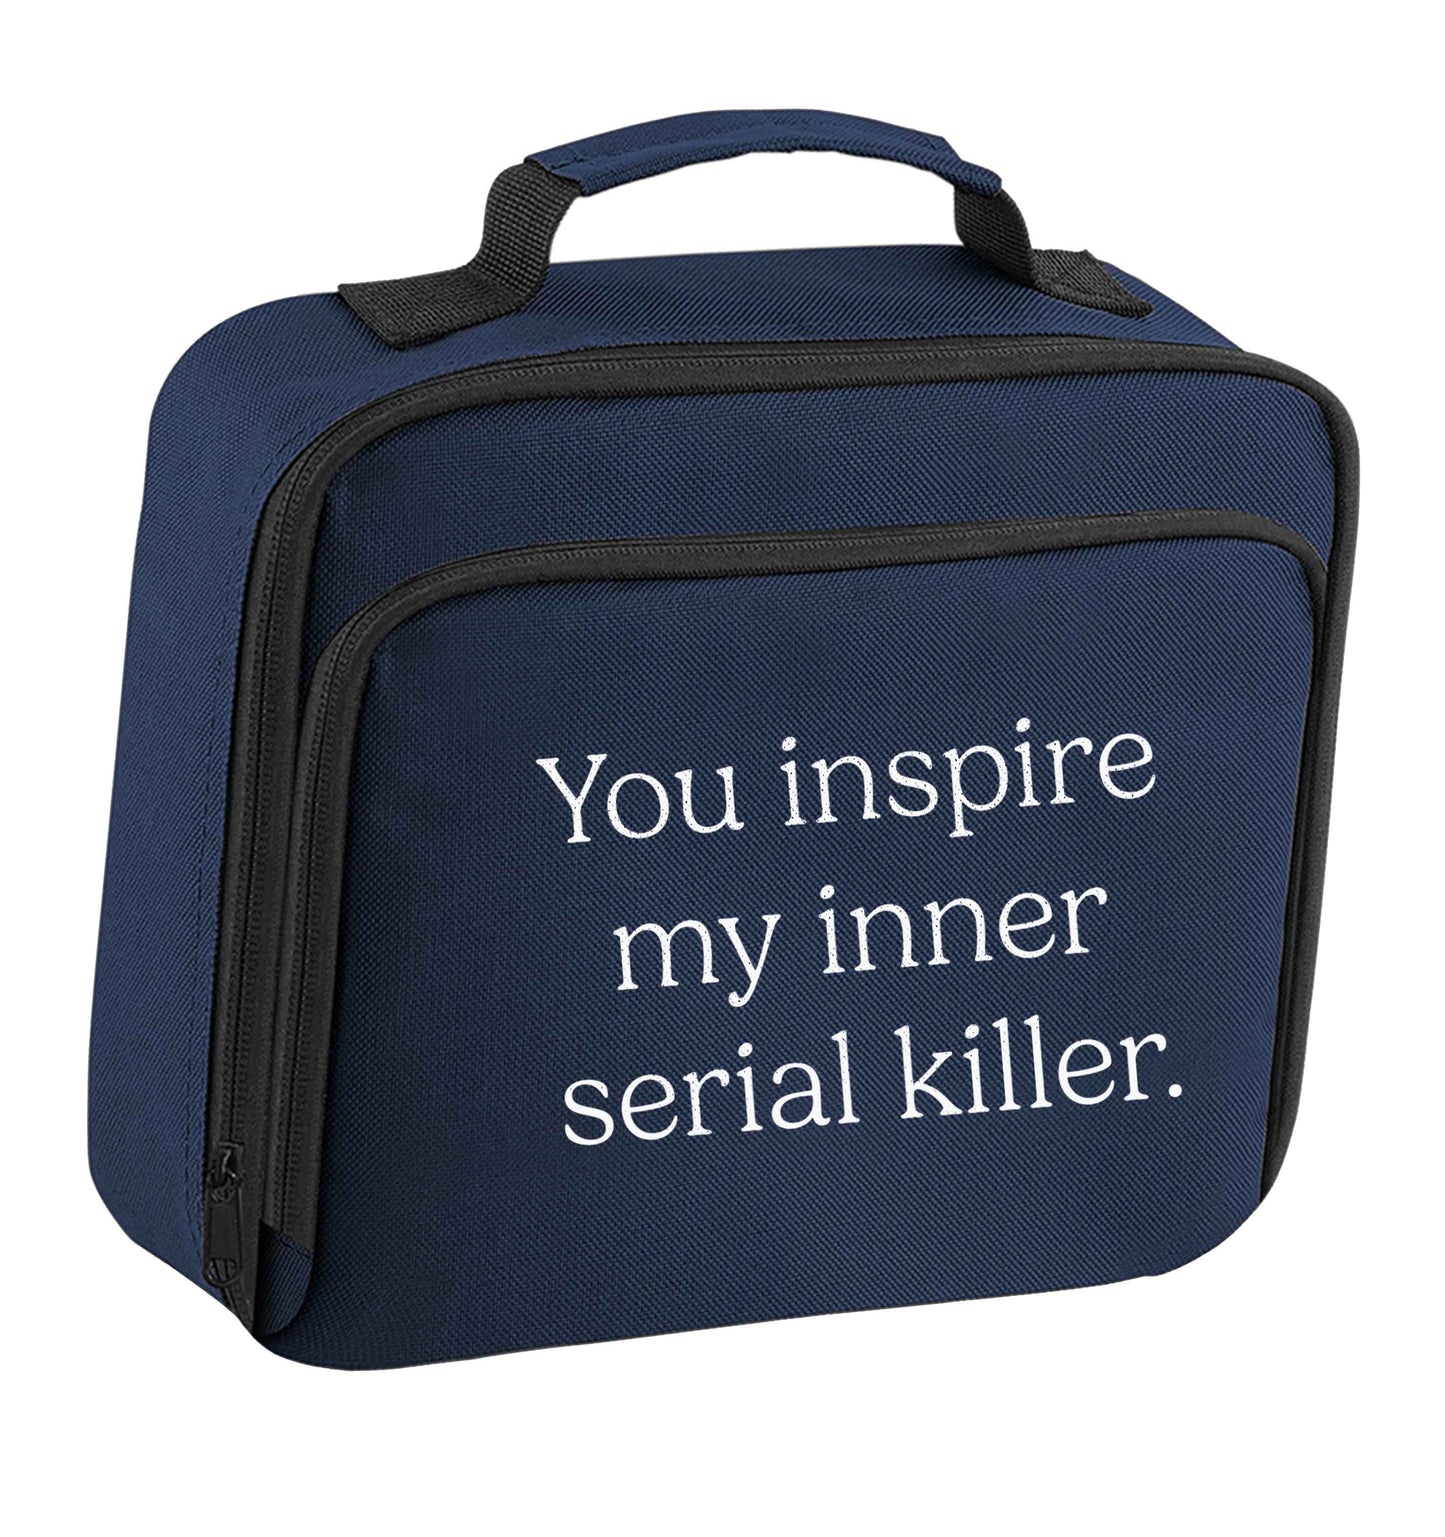 You inspire my inner serial killer Kit insulated navy lunch bag cooler